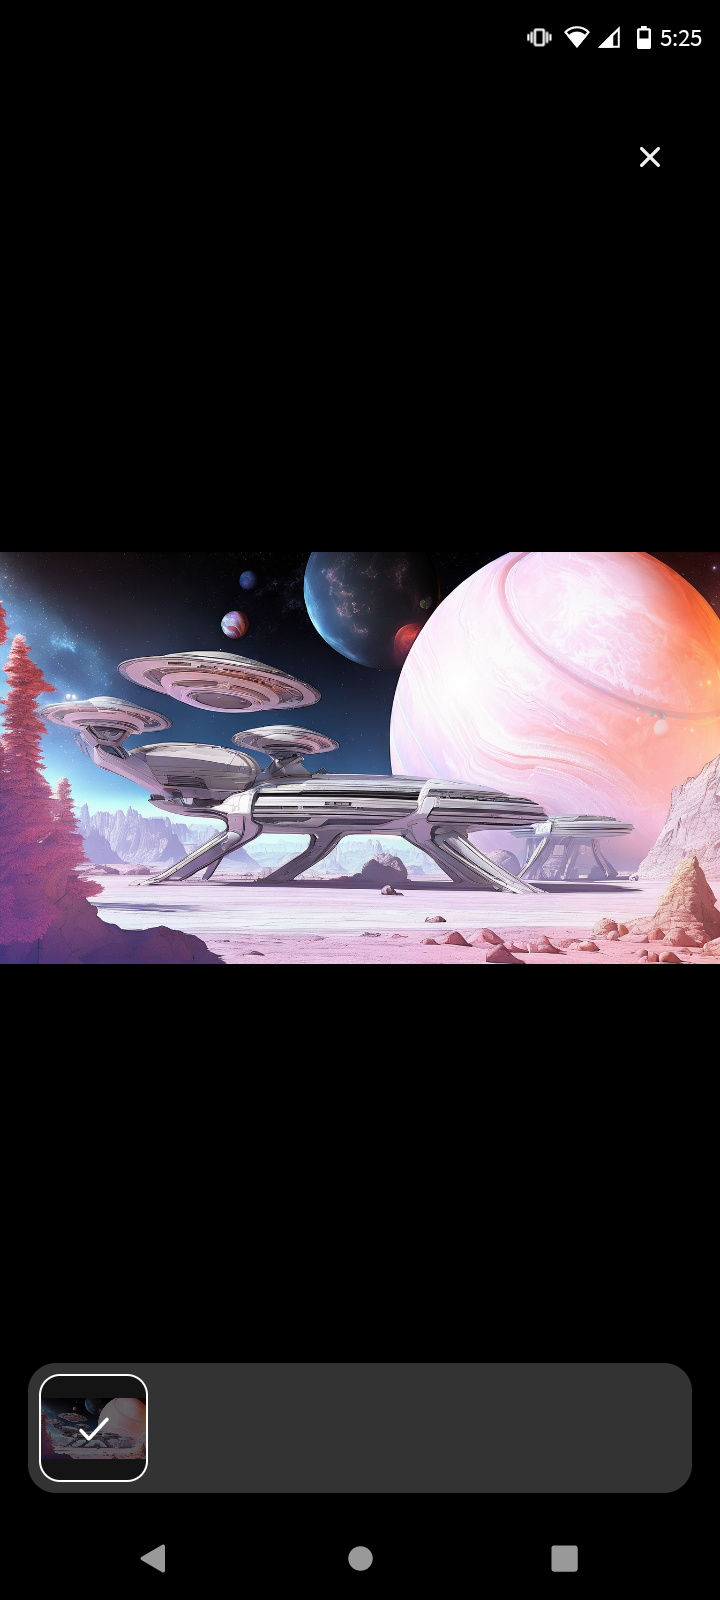 Red planet alien landscape.